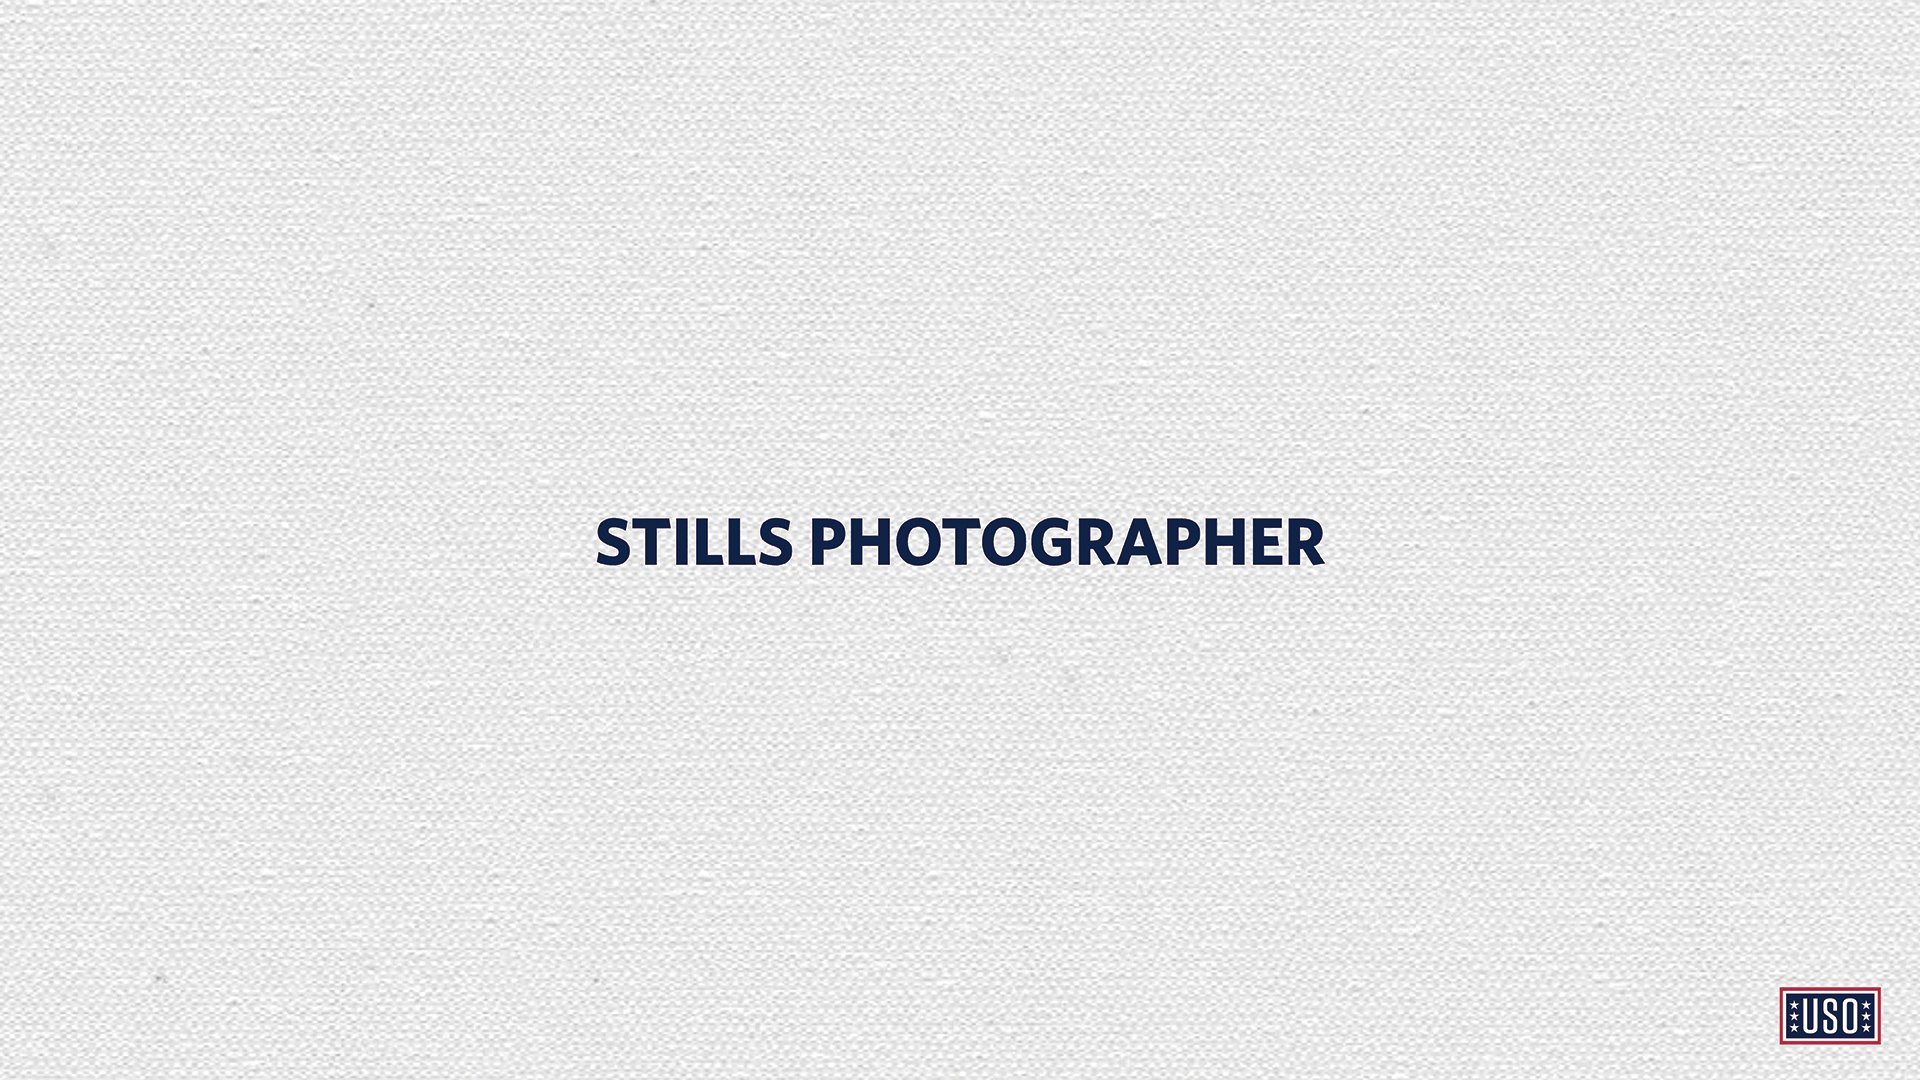 USO_Shoot_Stillphotographers_Page_1.jpg